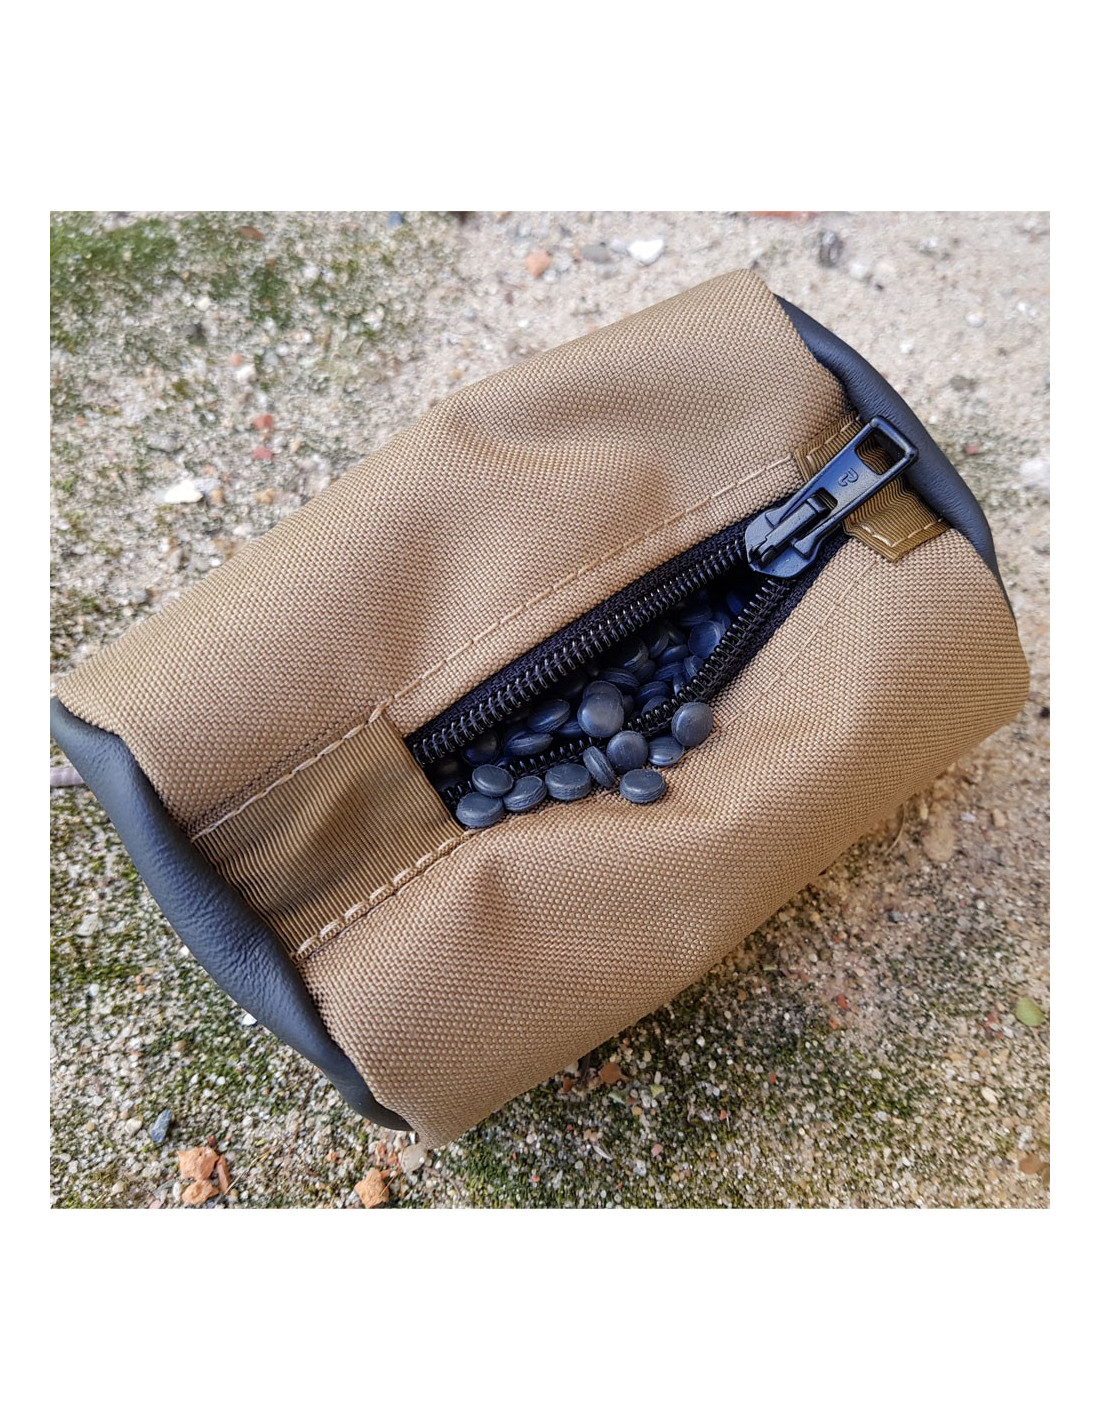 Backbone Bag Frame | Cole-TAC Outdoor Gear